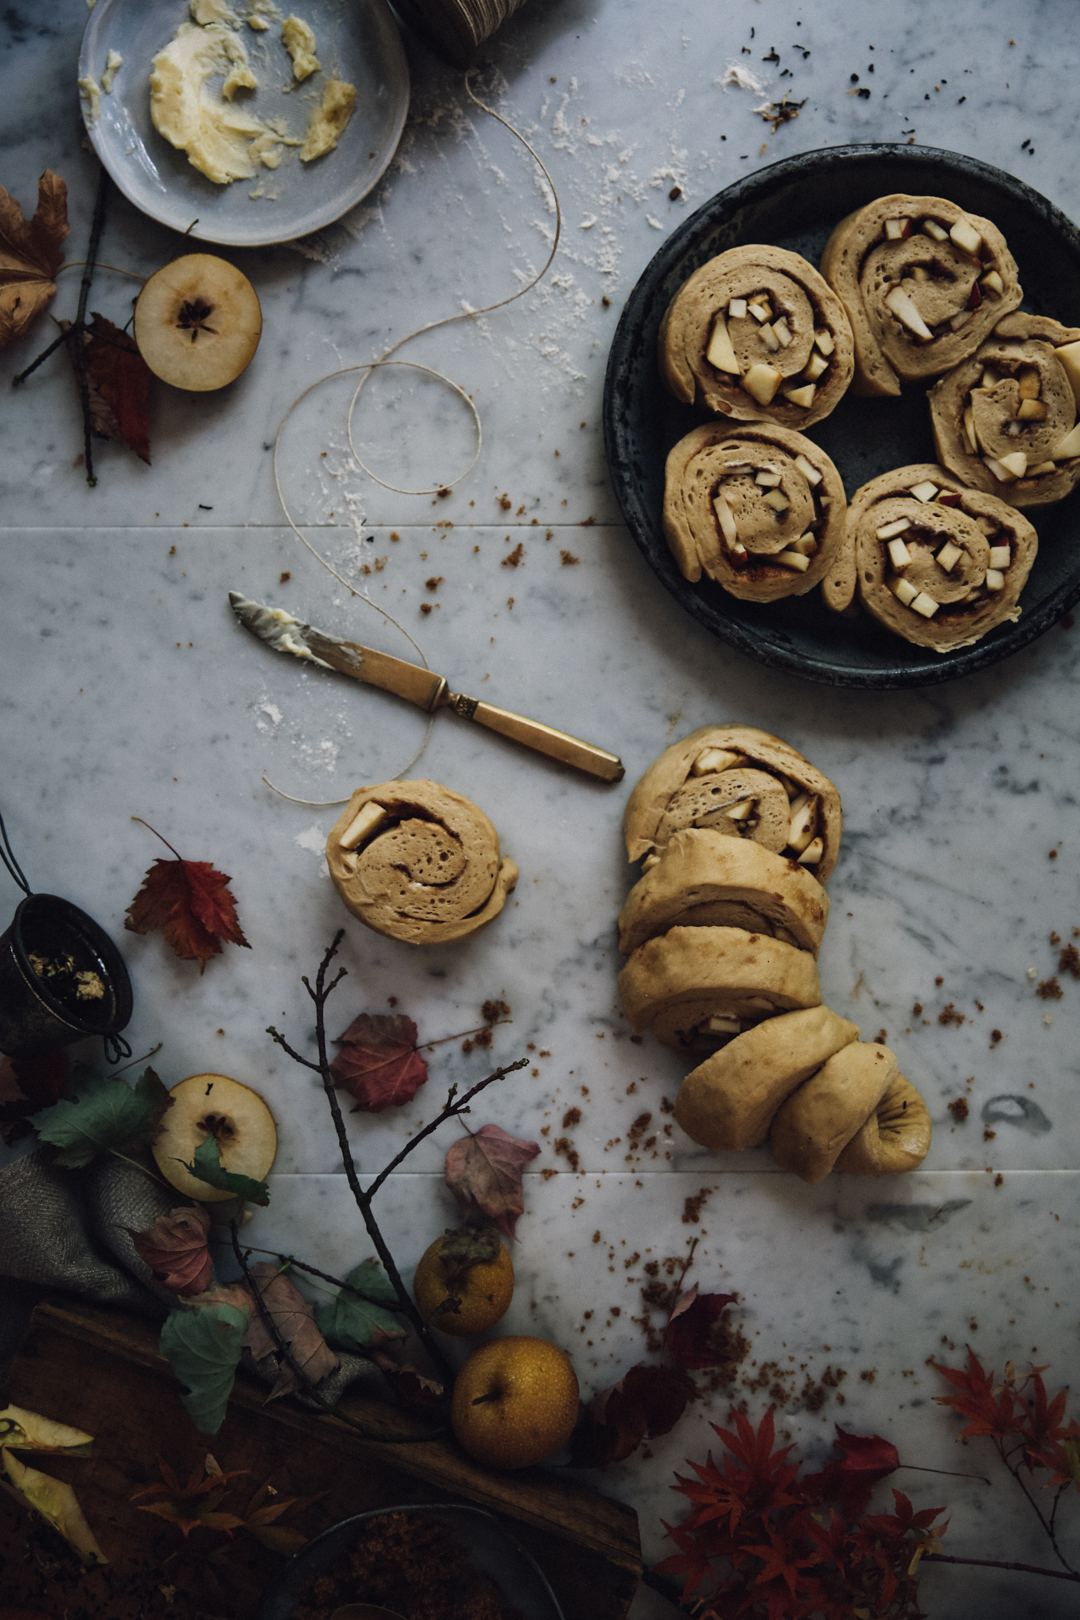 spiced-autumn-cinnamon-rolls-photography-styling-recipe-by-christiann-koepke-of-christiannkoepke-com-12